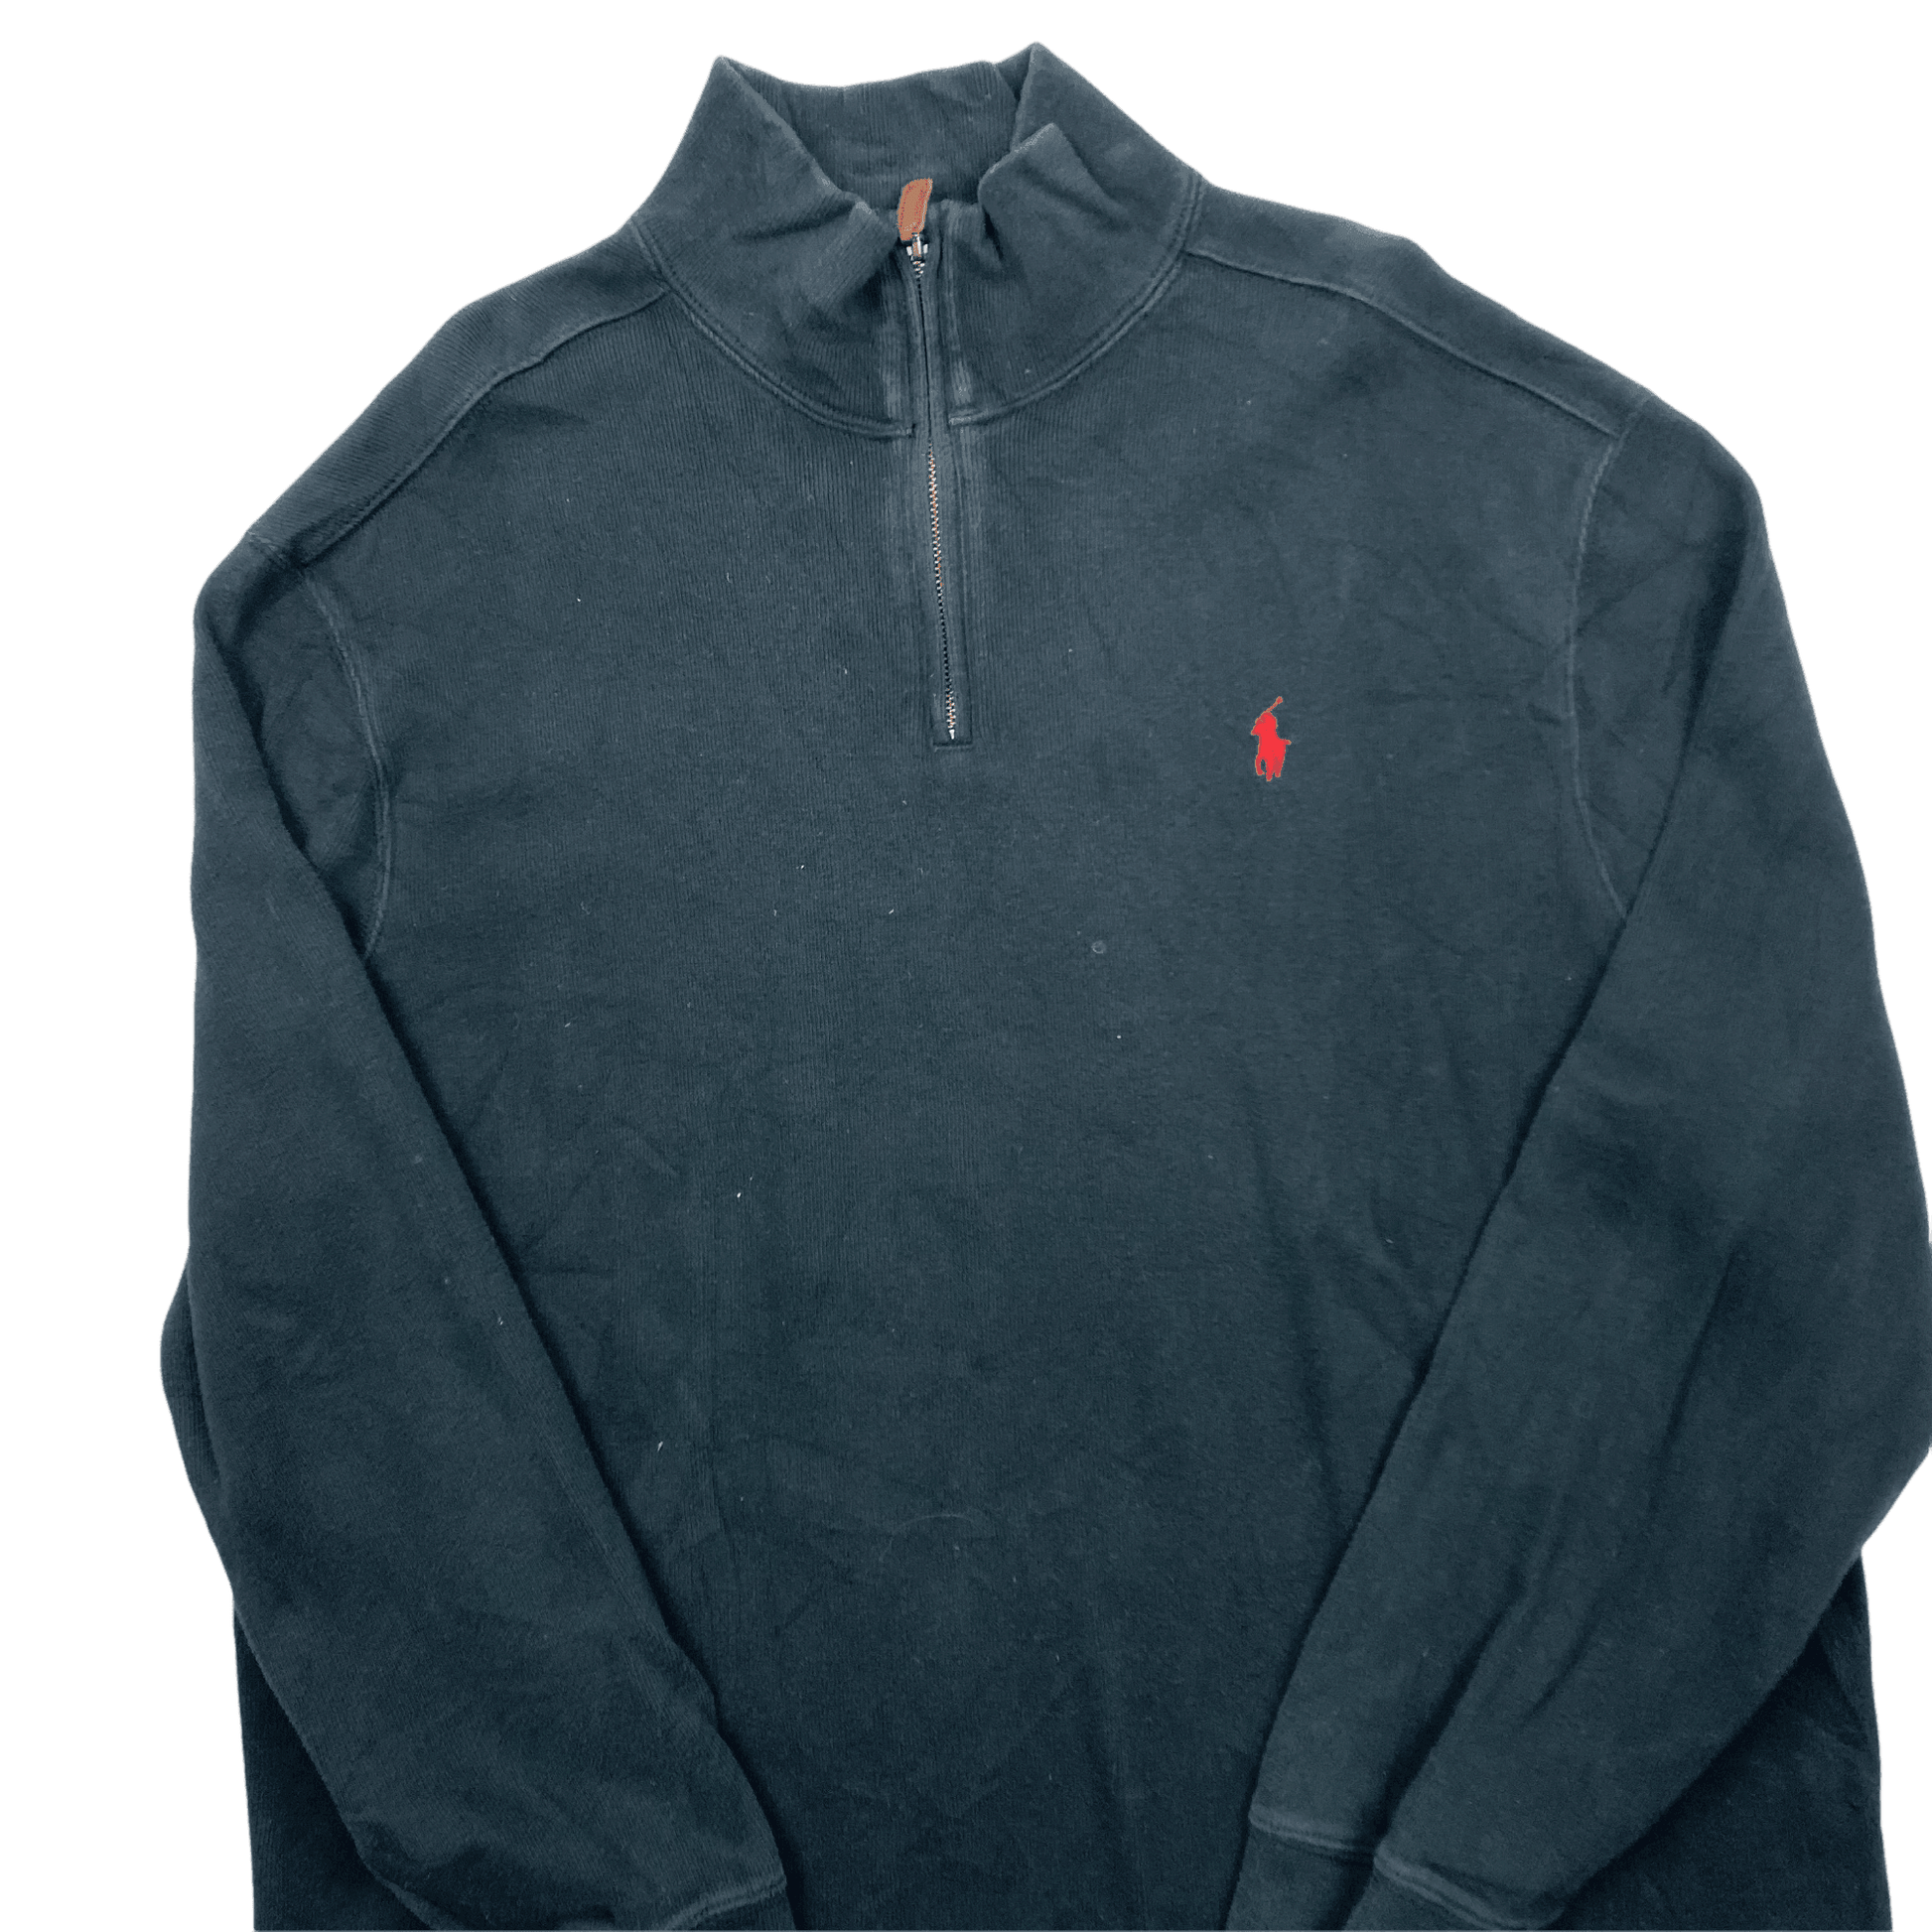 Vintage 90s Black Polo Ralph Lauren Quarter Zip Sweatshirt - XXL (Recommended Size - Extra Large) - The Streetwear Studio